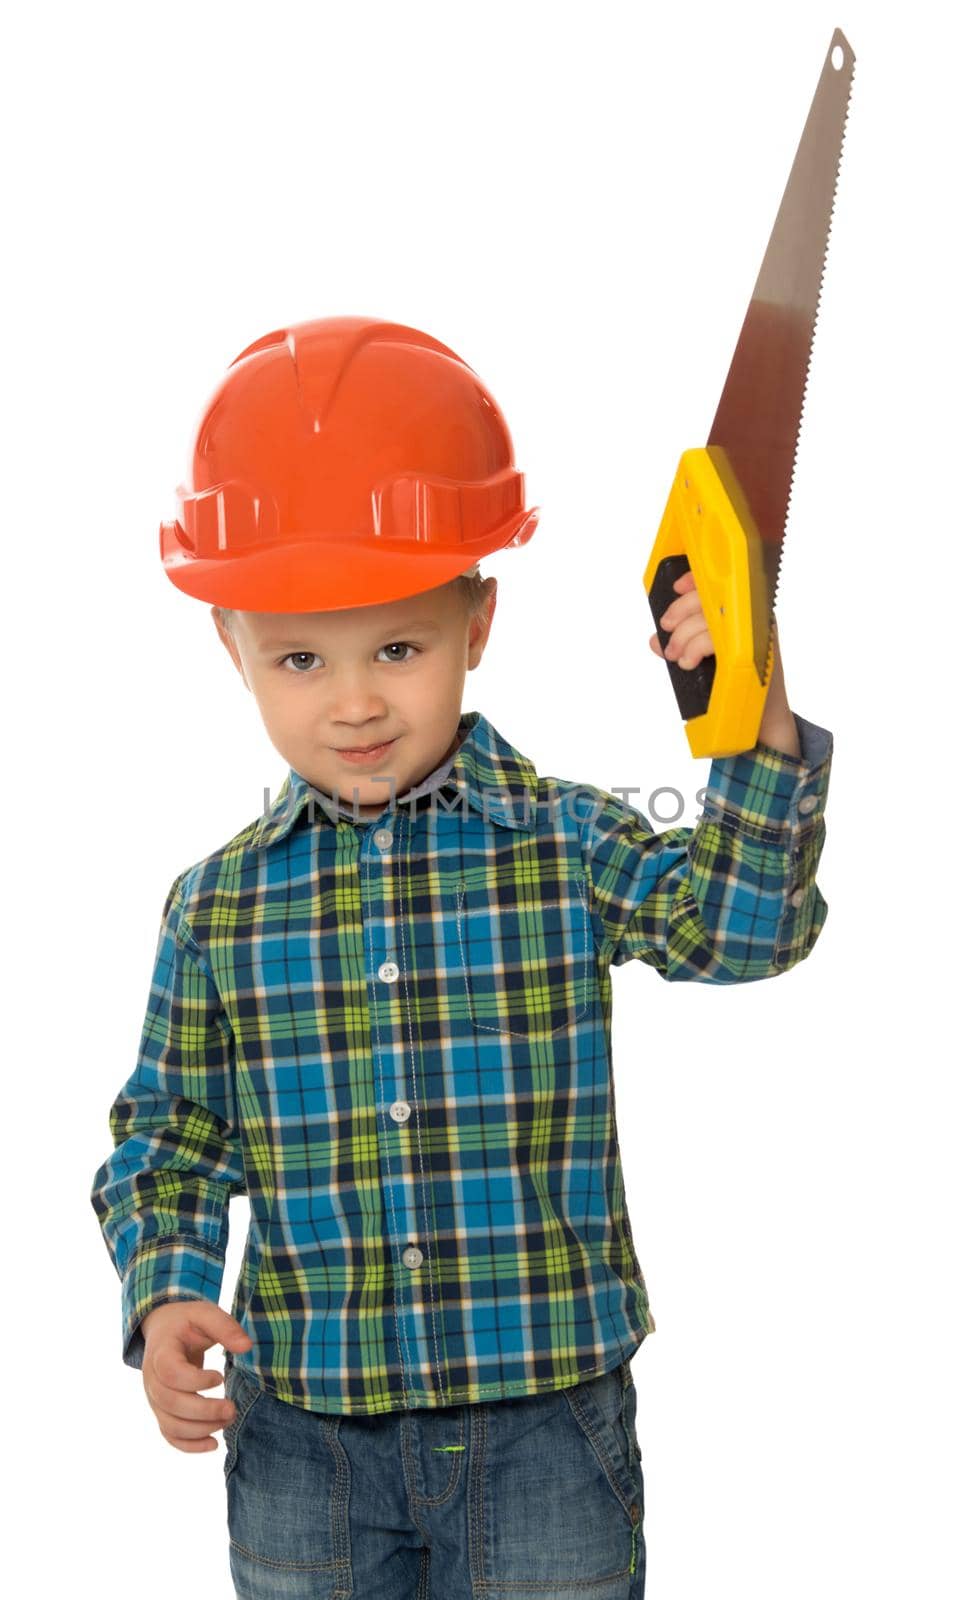 Boy with a saw in his hand by kolesnikov_studio